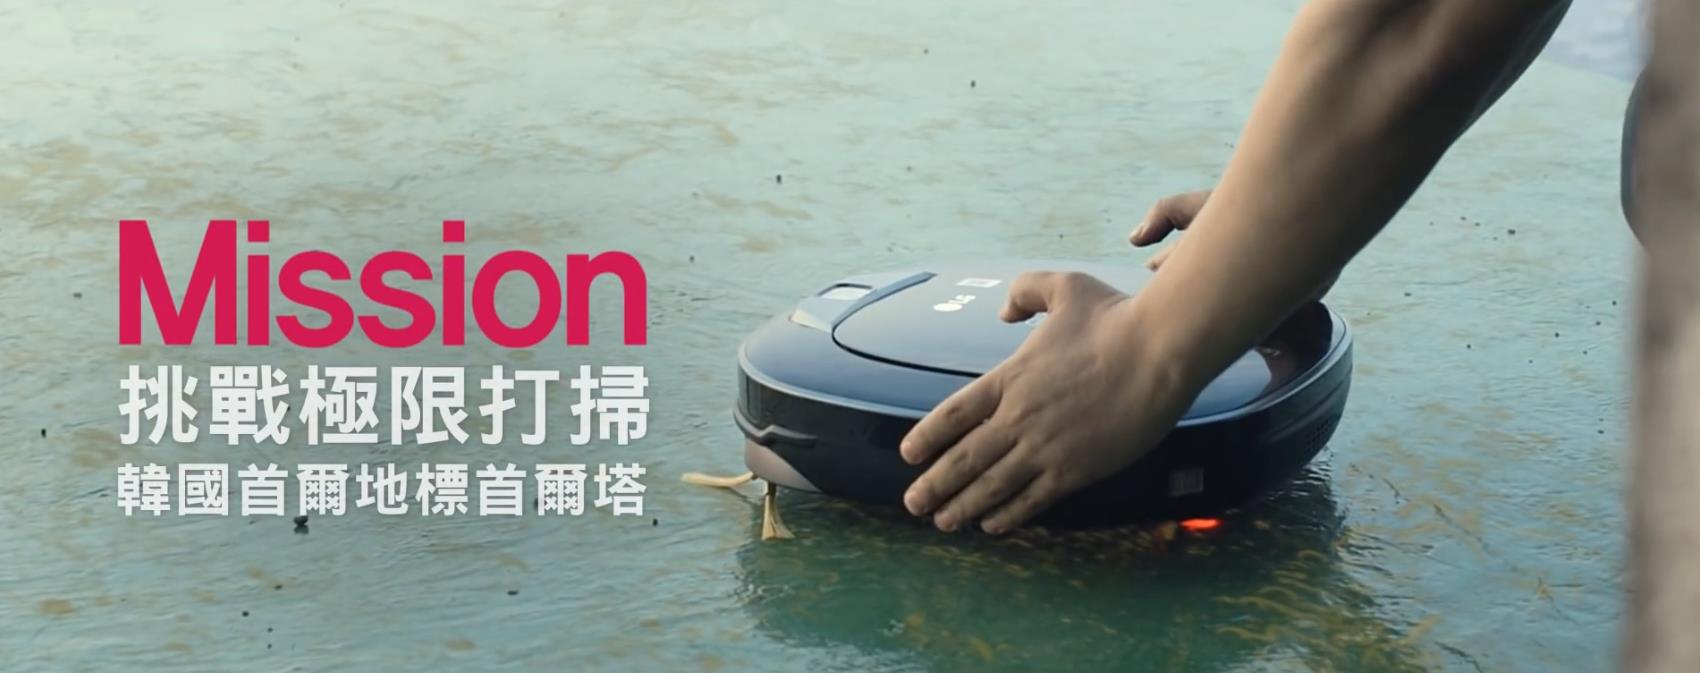 LG 双眼小精灵 清洁机器人 挑战极限打扫任务广告.mp4